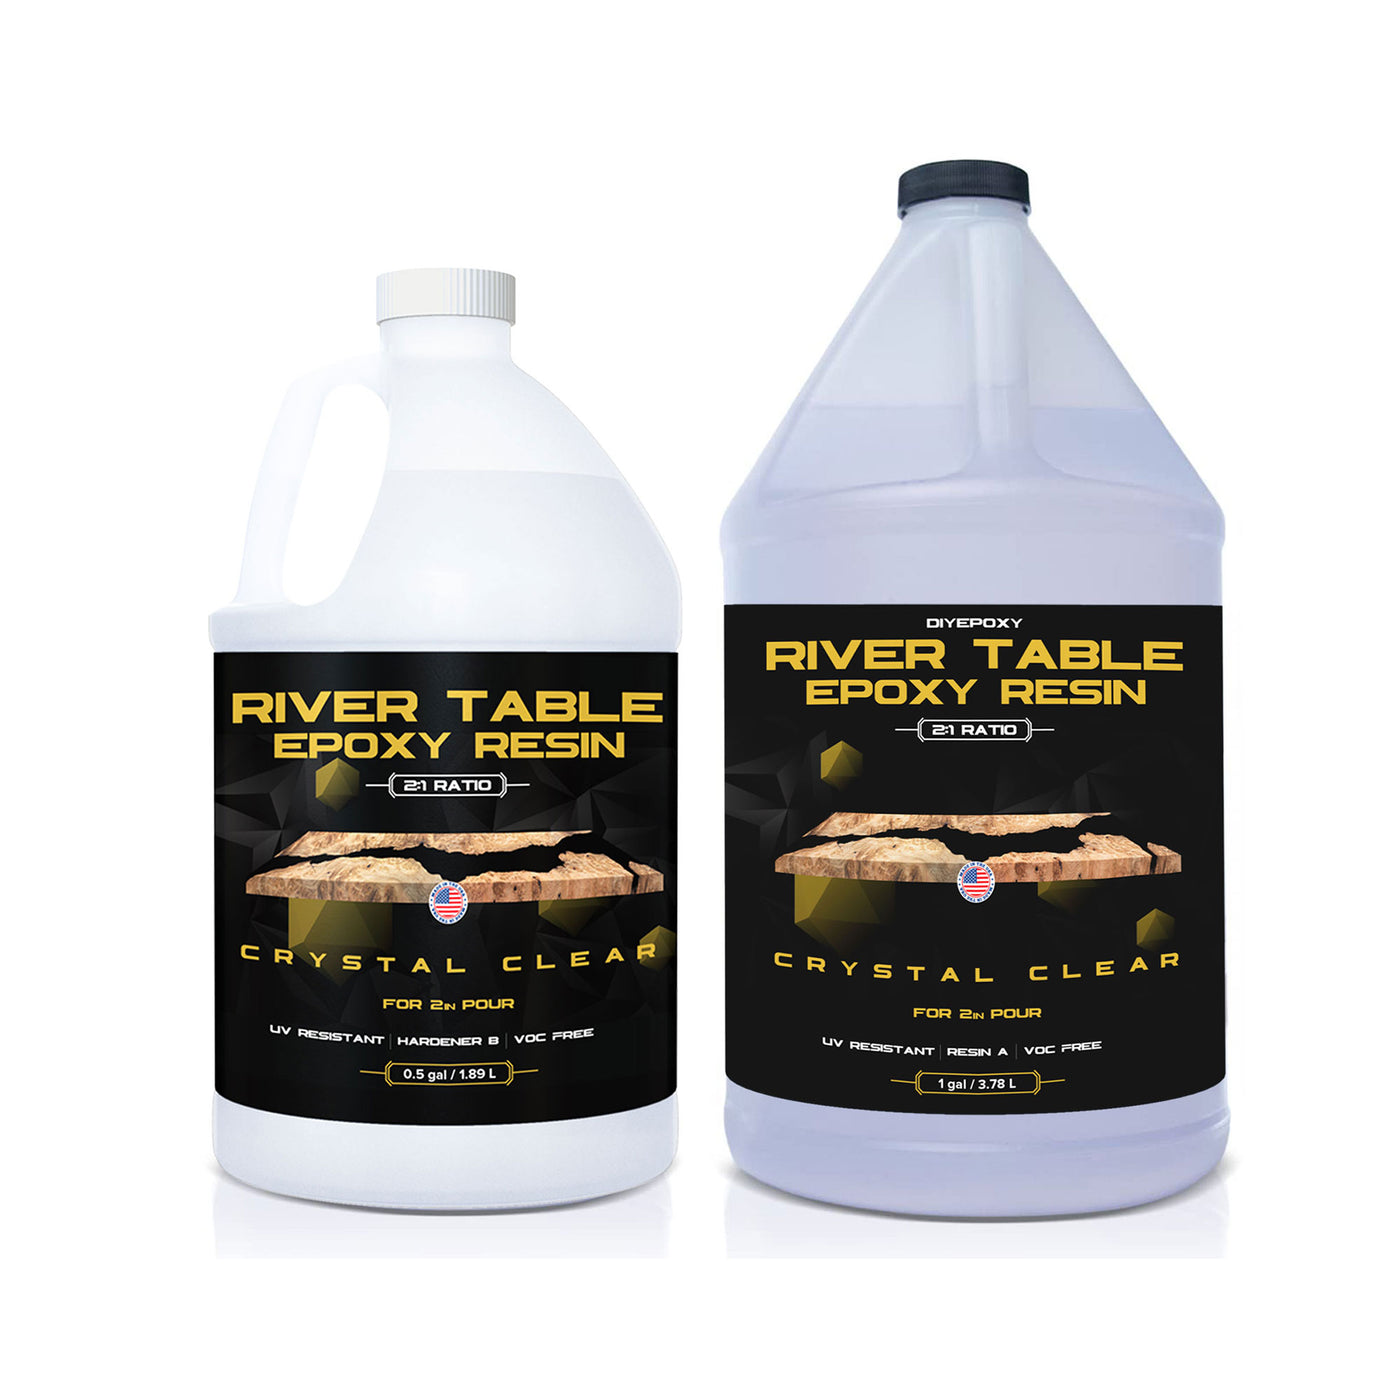 Deep Pour Epoxy Resin for River Table, 3 Gallon (11.4 L)